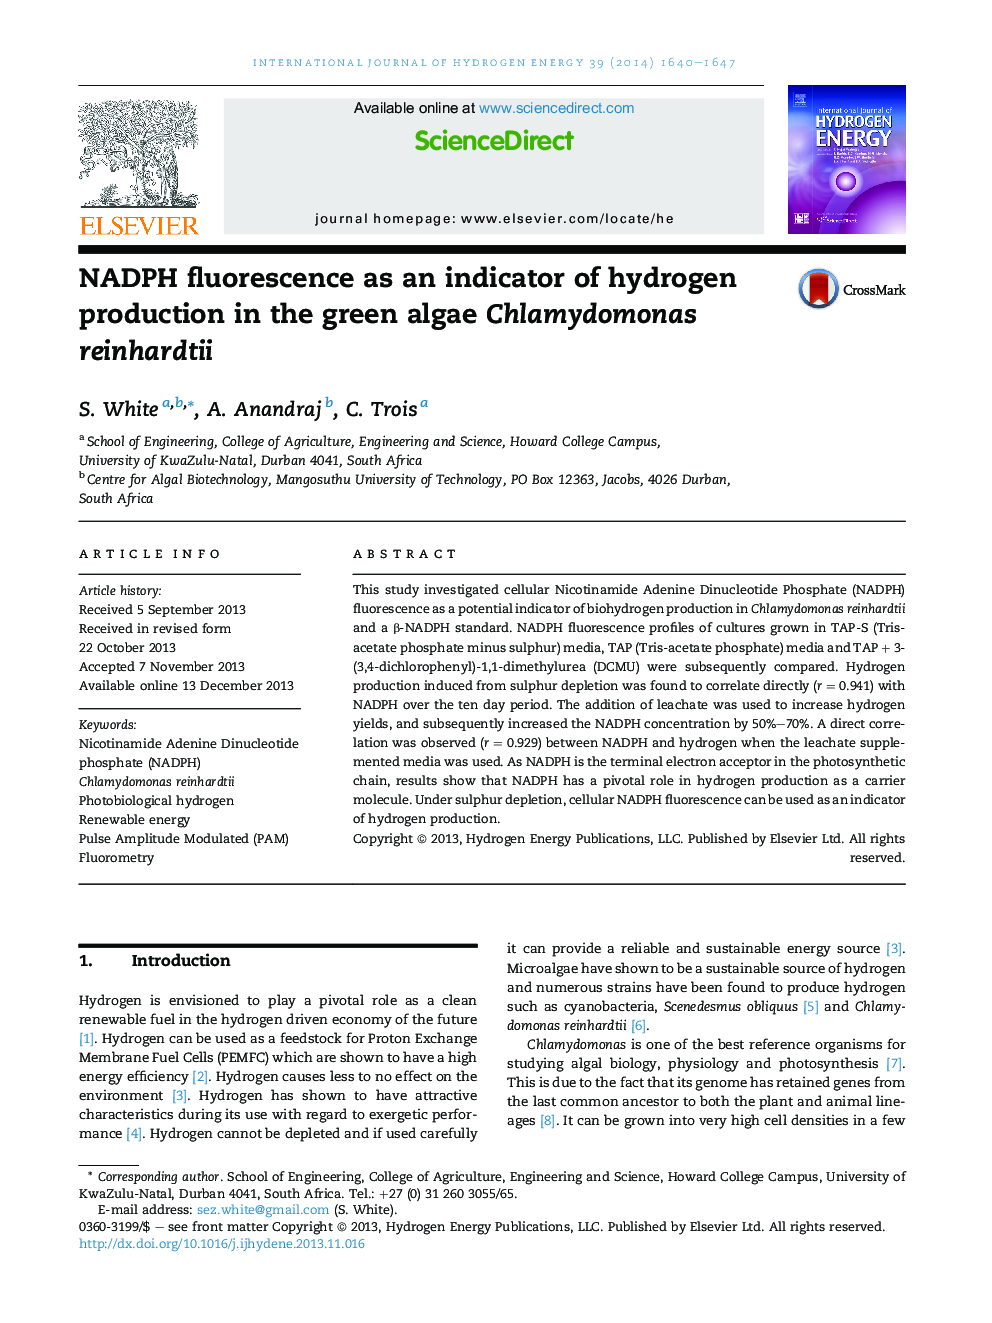 NADPH fluorescence as an indicator of hydrogen production in the green algae Chlamydomonas reinhardtii